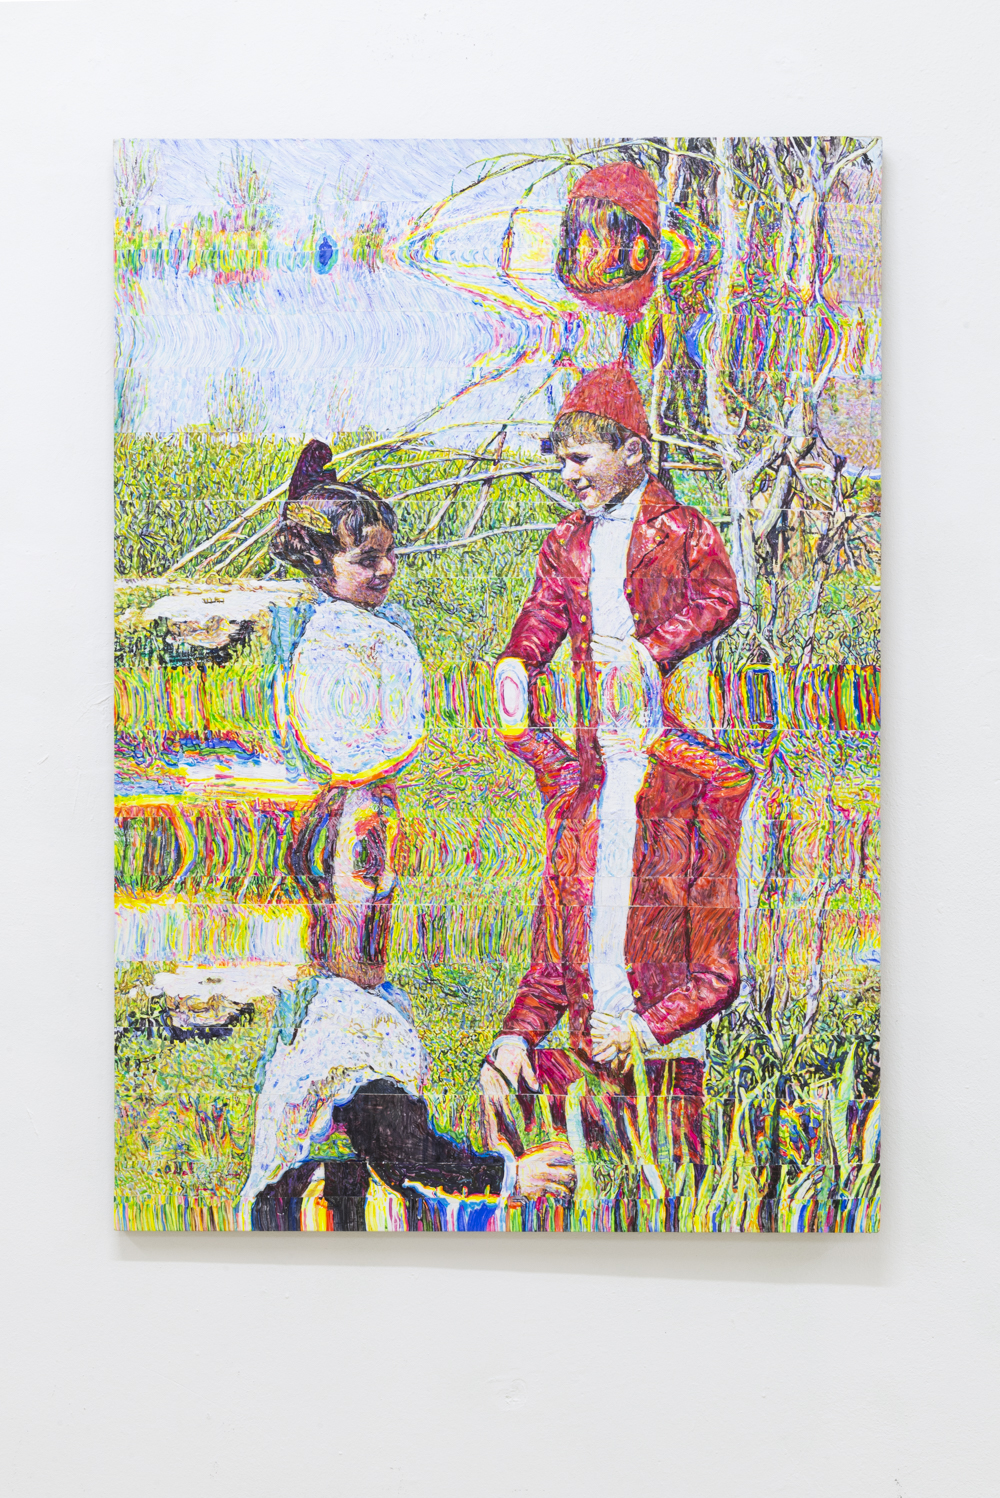 Alejandro Bombín, Animales antófilos, 2014, acrylics on canvas, 119,5 x 83,5 cm